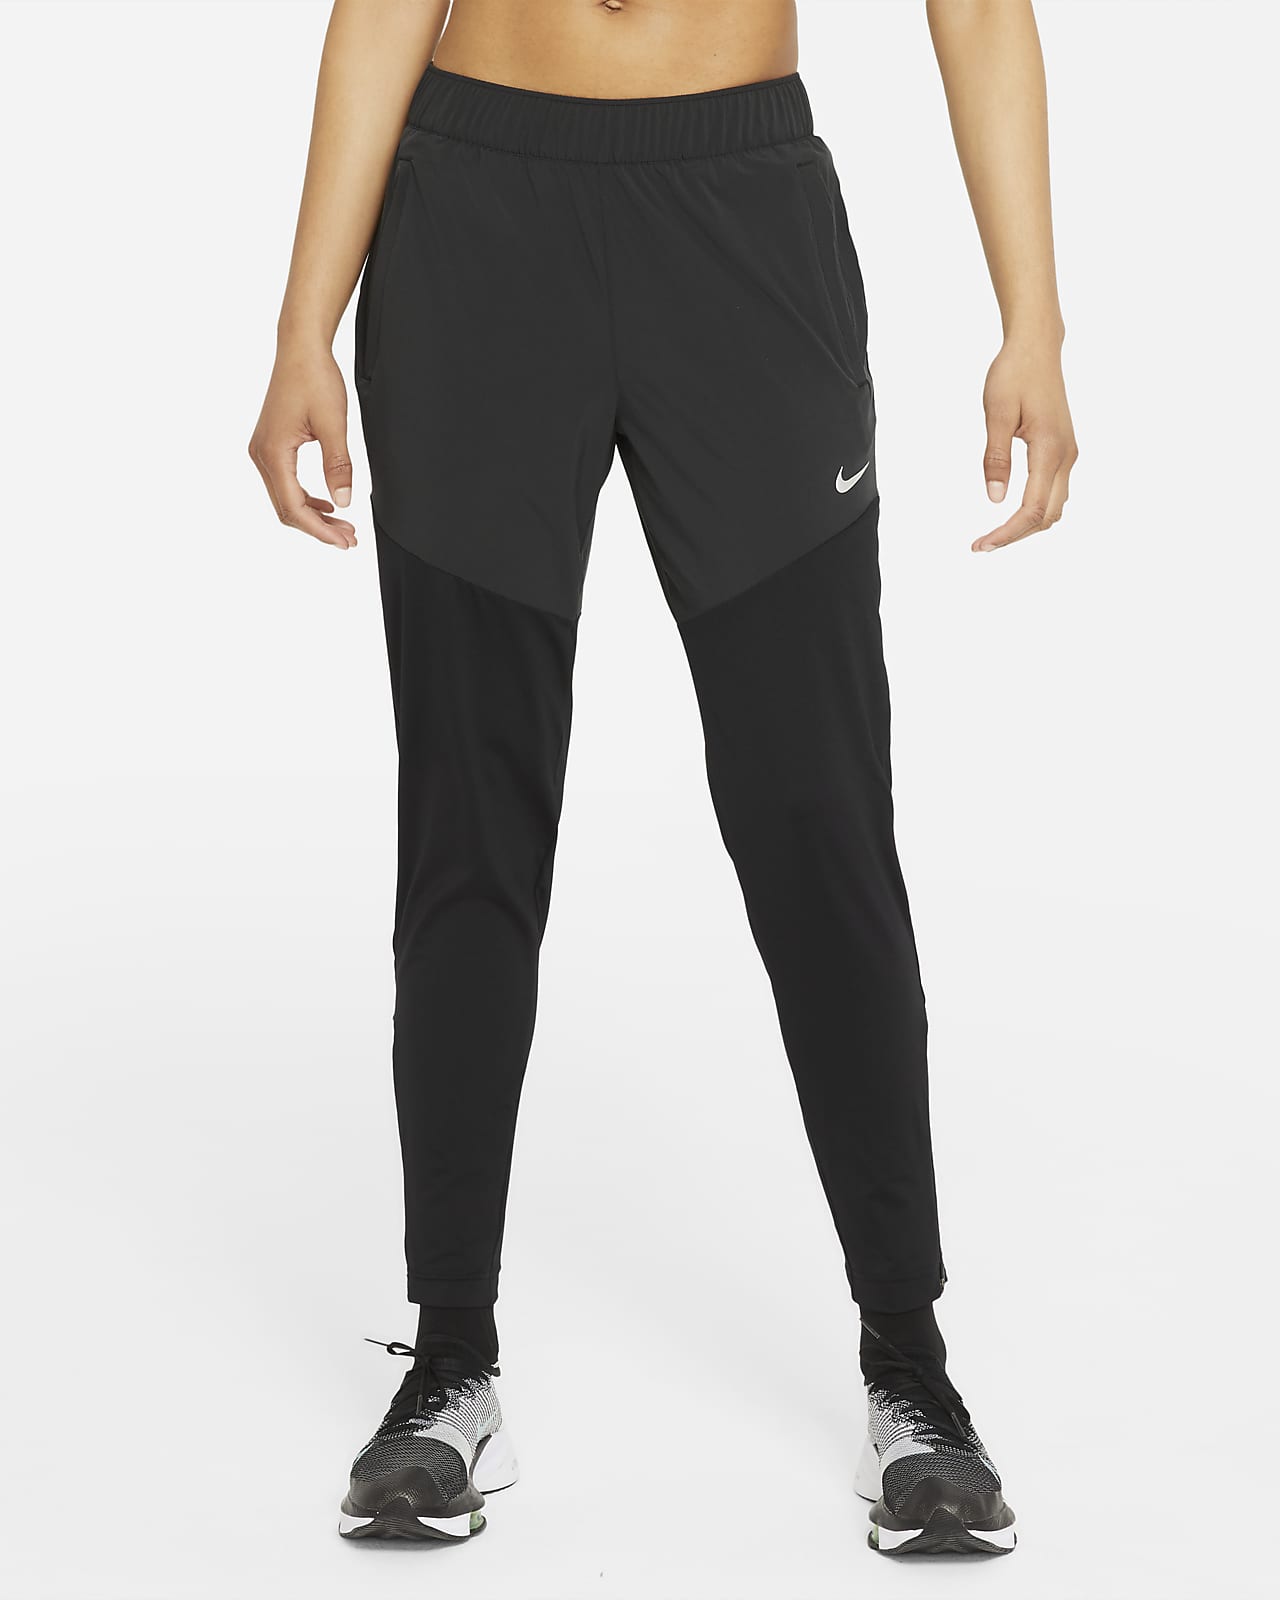 Nedgang akse økse Nike Dri-FIT Essential Women's Running Trousers. Nike LU